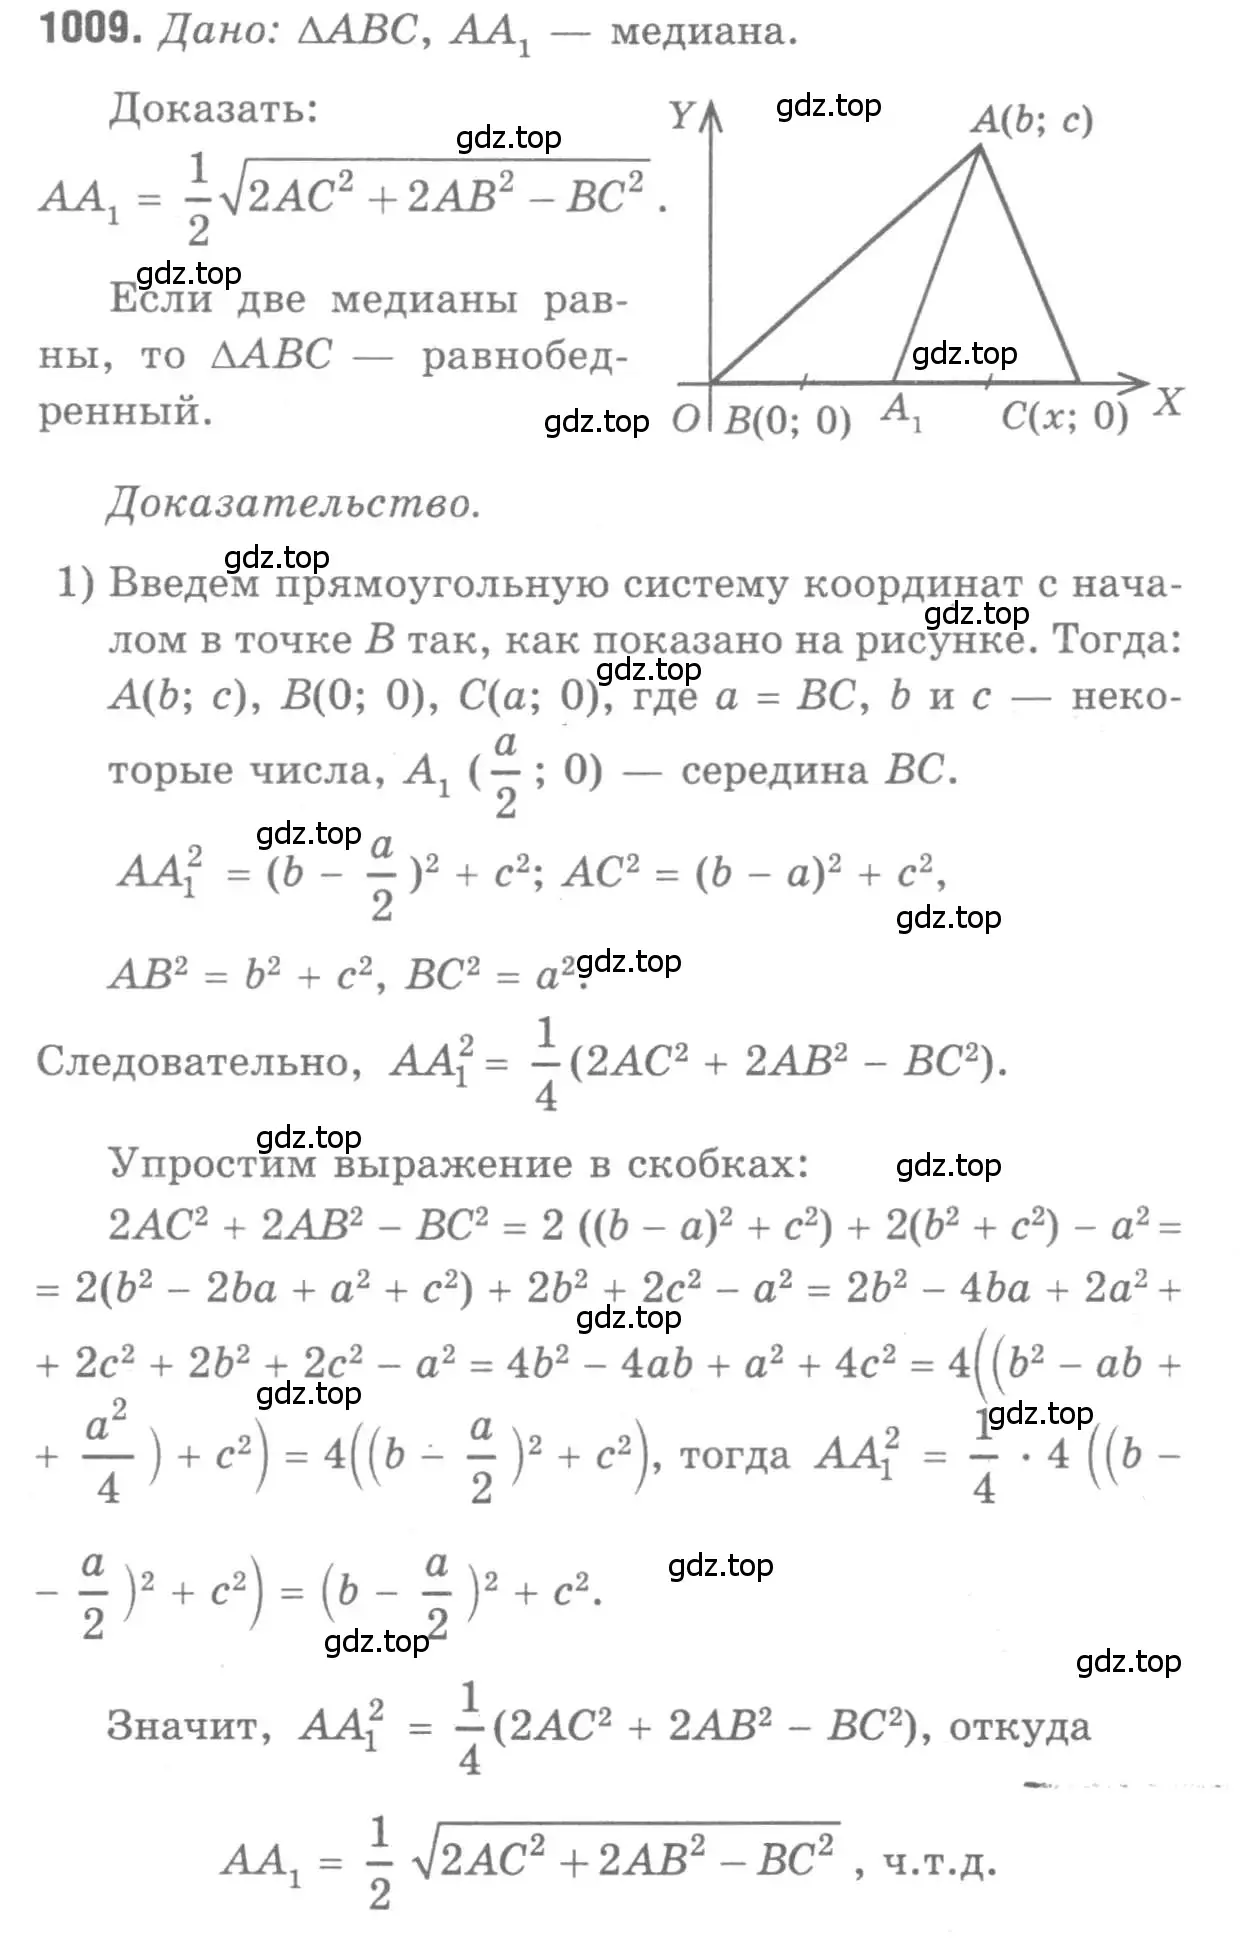 Решение 9. номер 1009 (страница 247) гдз по геометрии 7-9 класс Атанасян, Бутузов, учебник